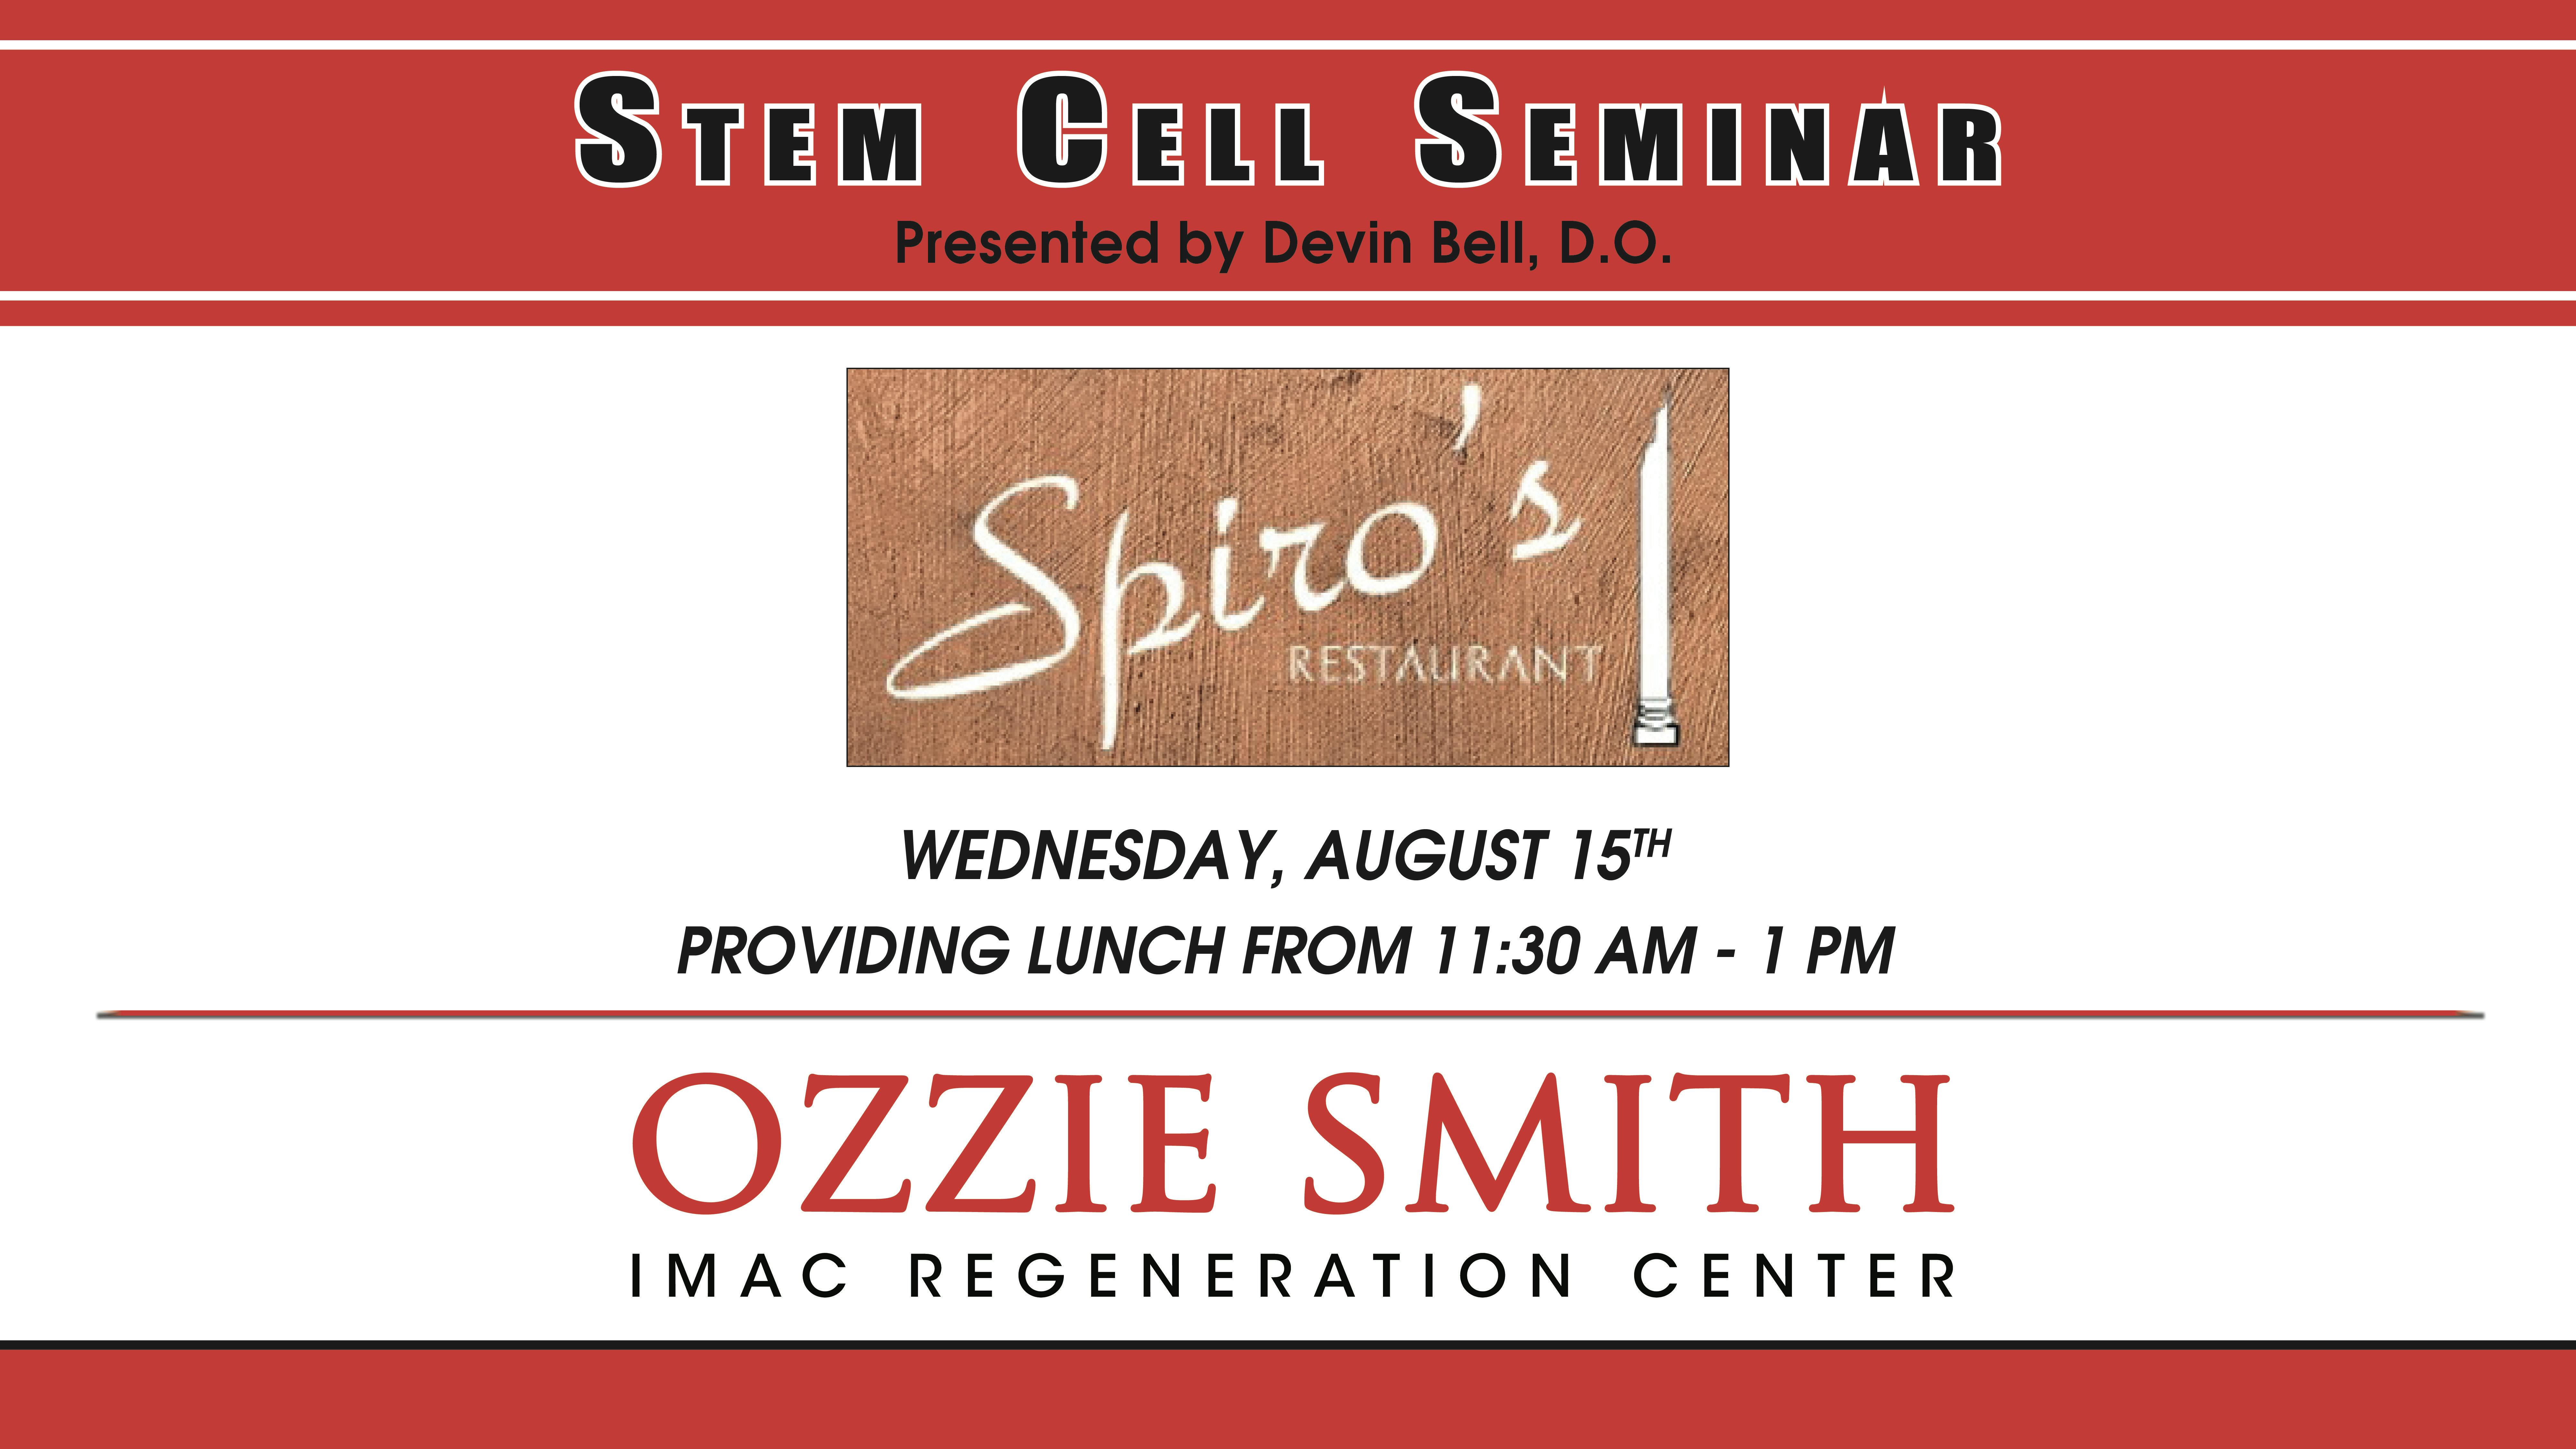 Ozzie Smith IMAC Regeneration Center Stem Cell Seminar